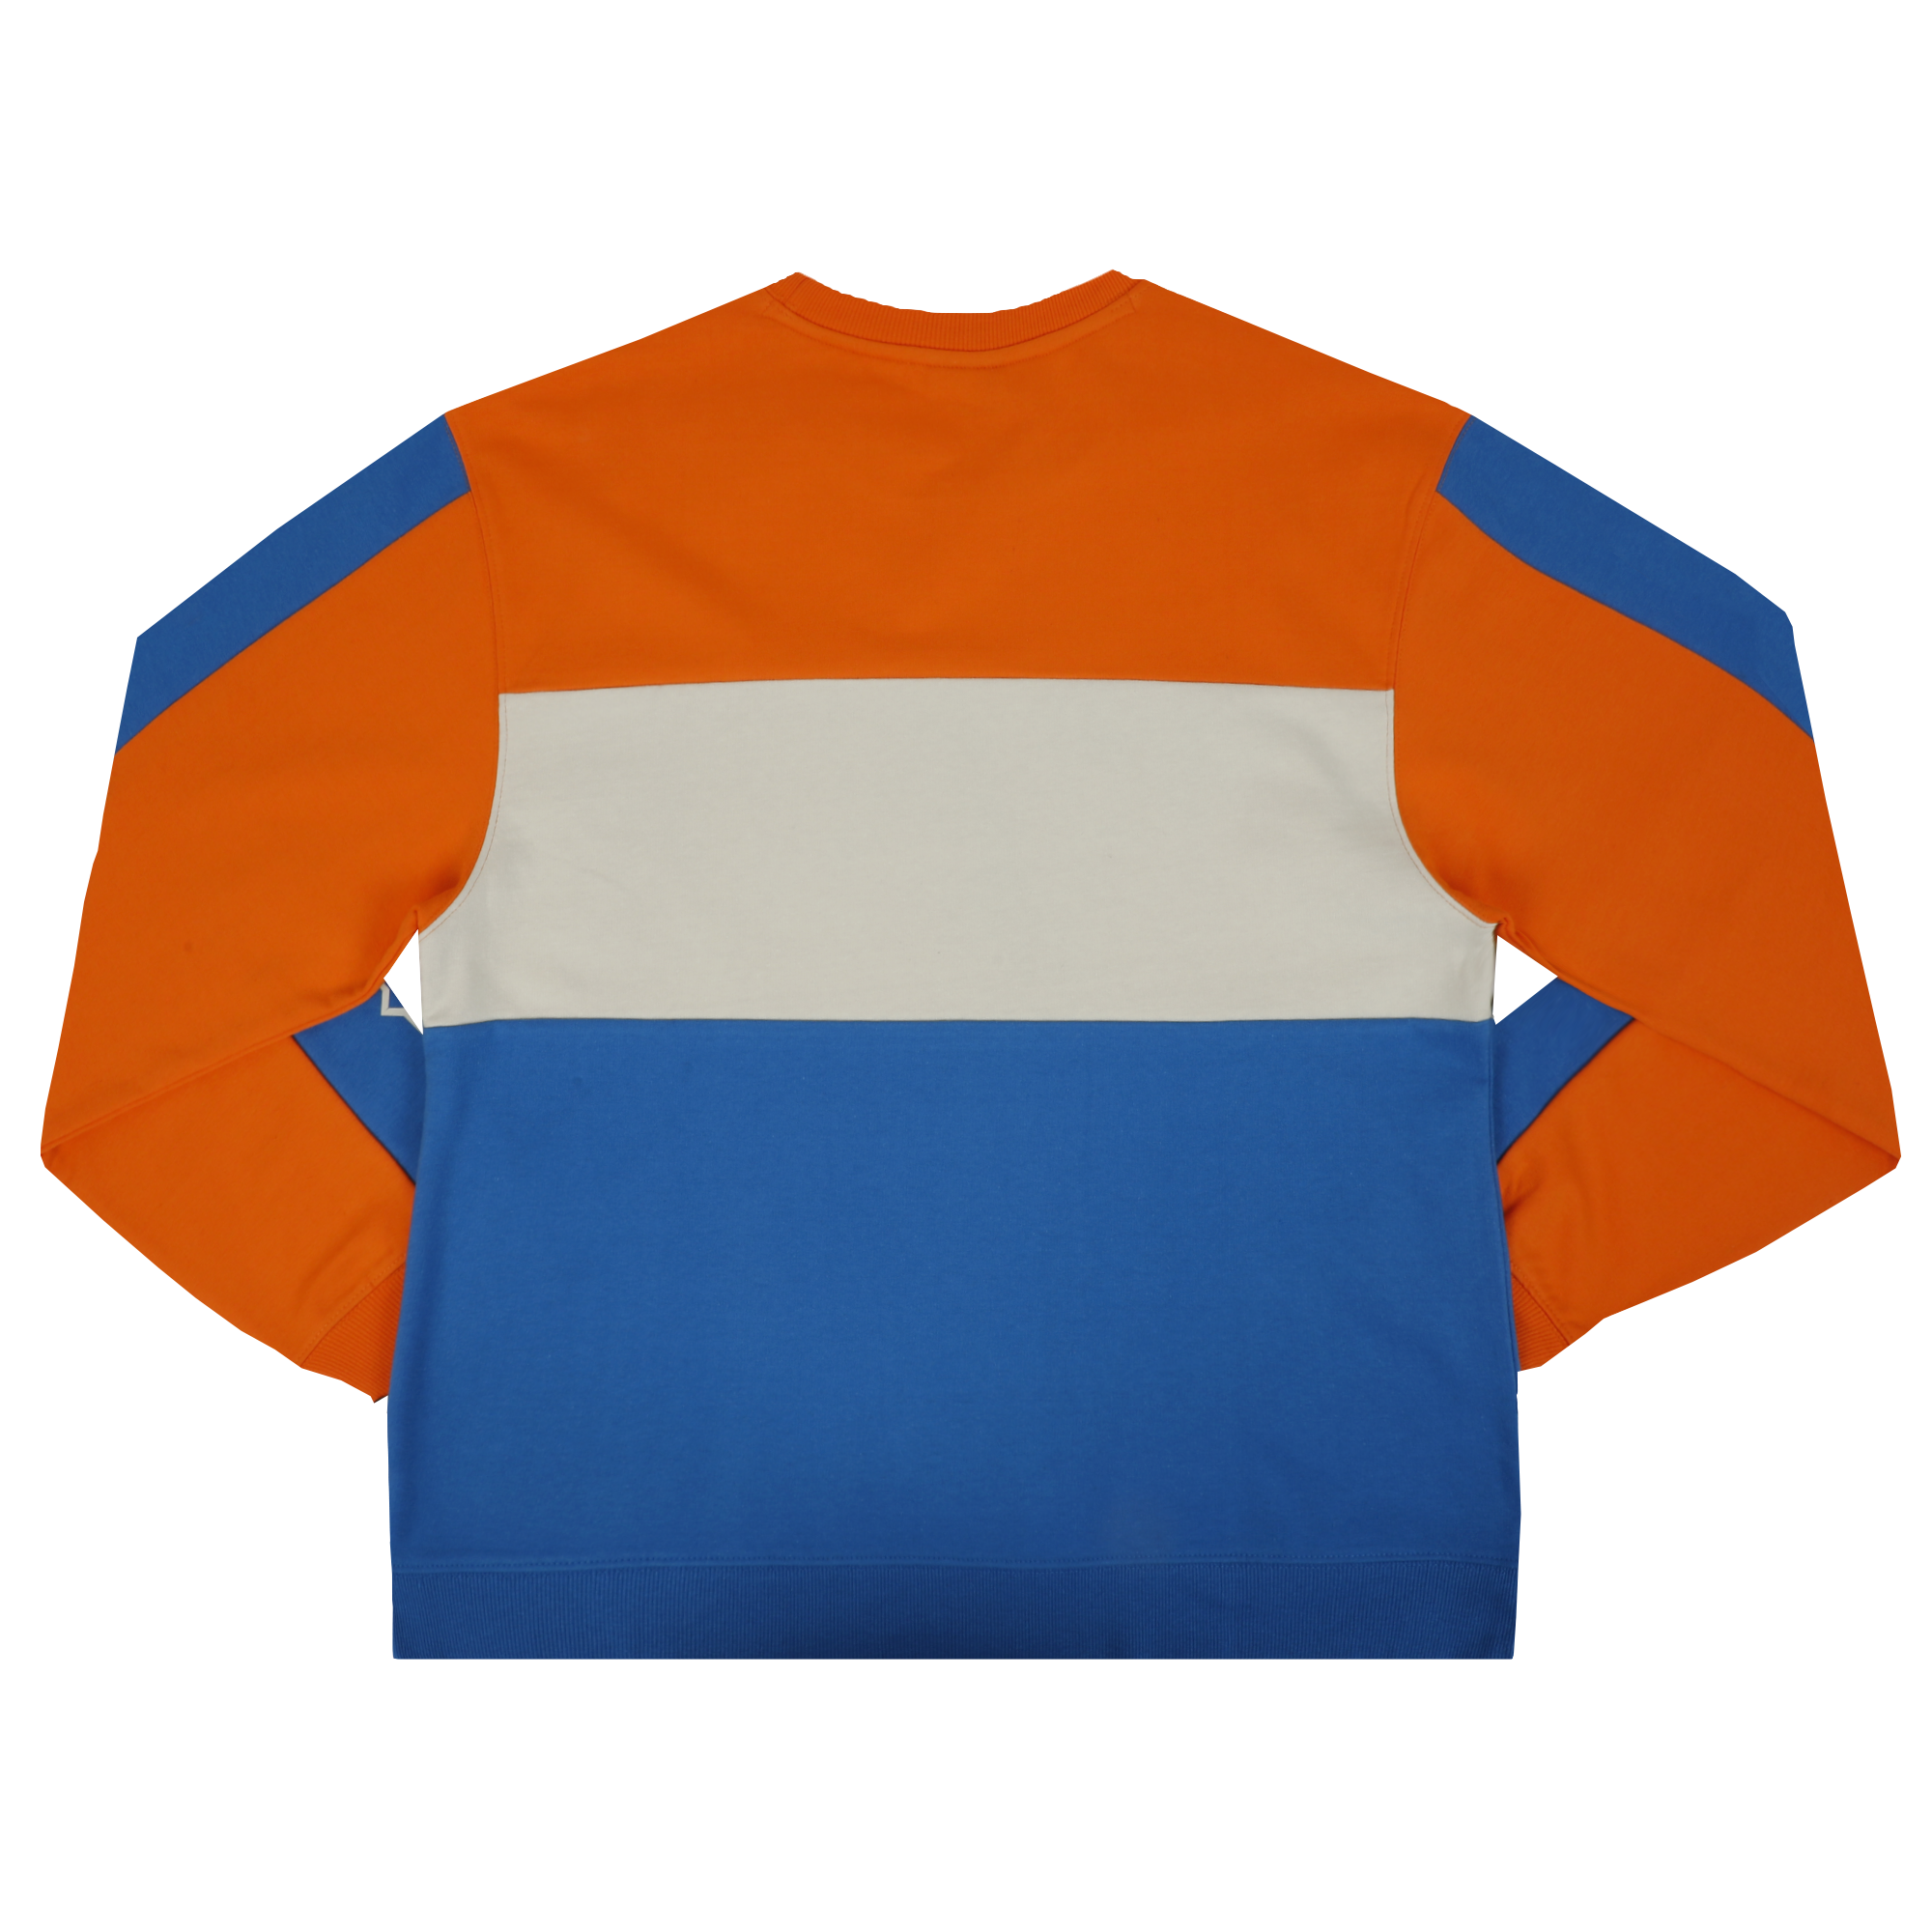 332 Company Colorblock Sweatshirt